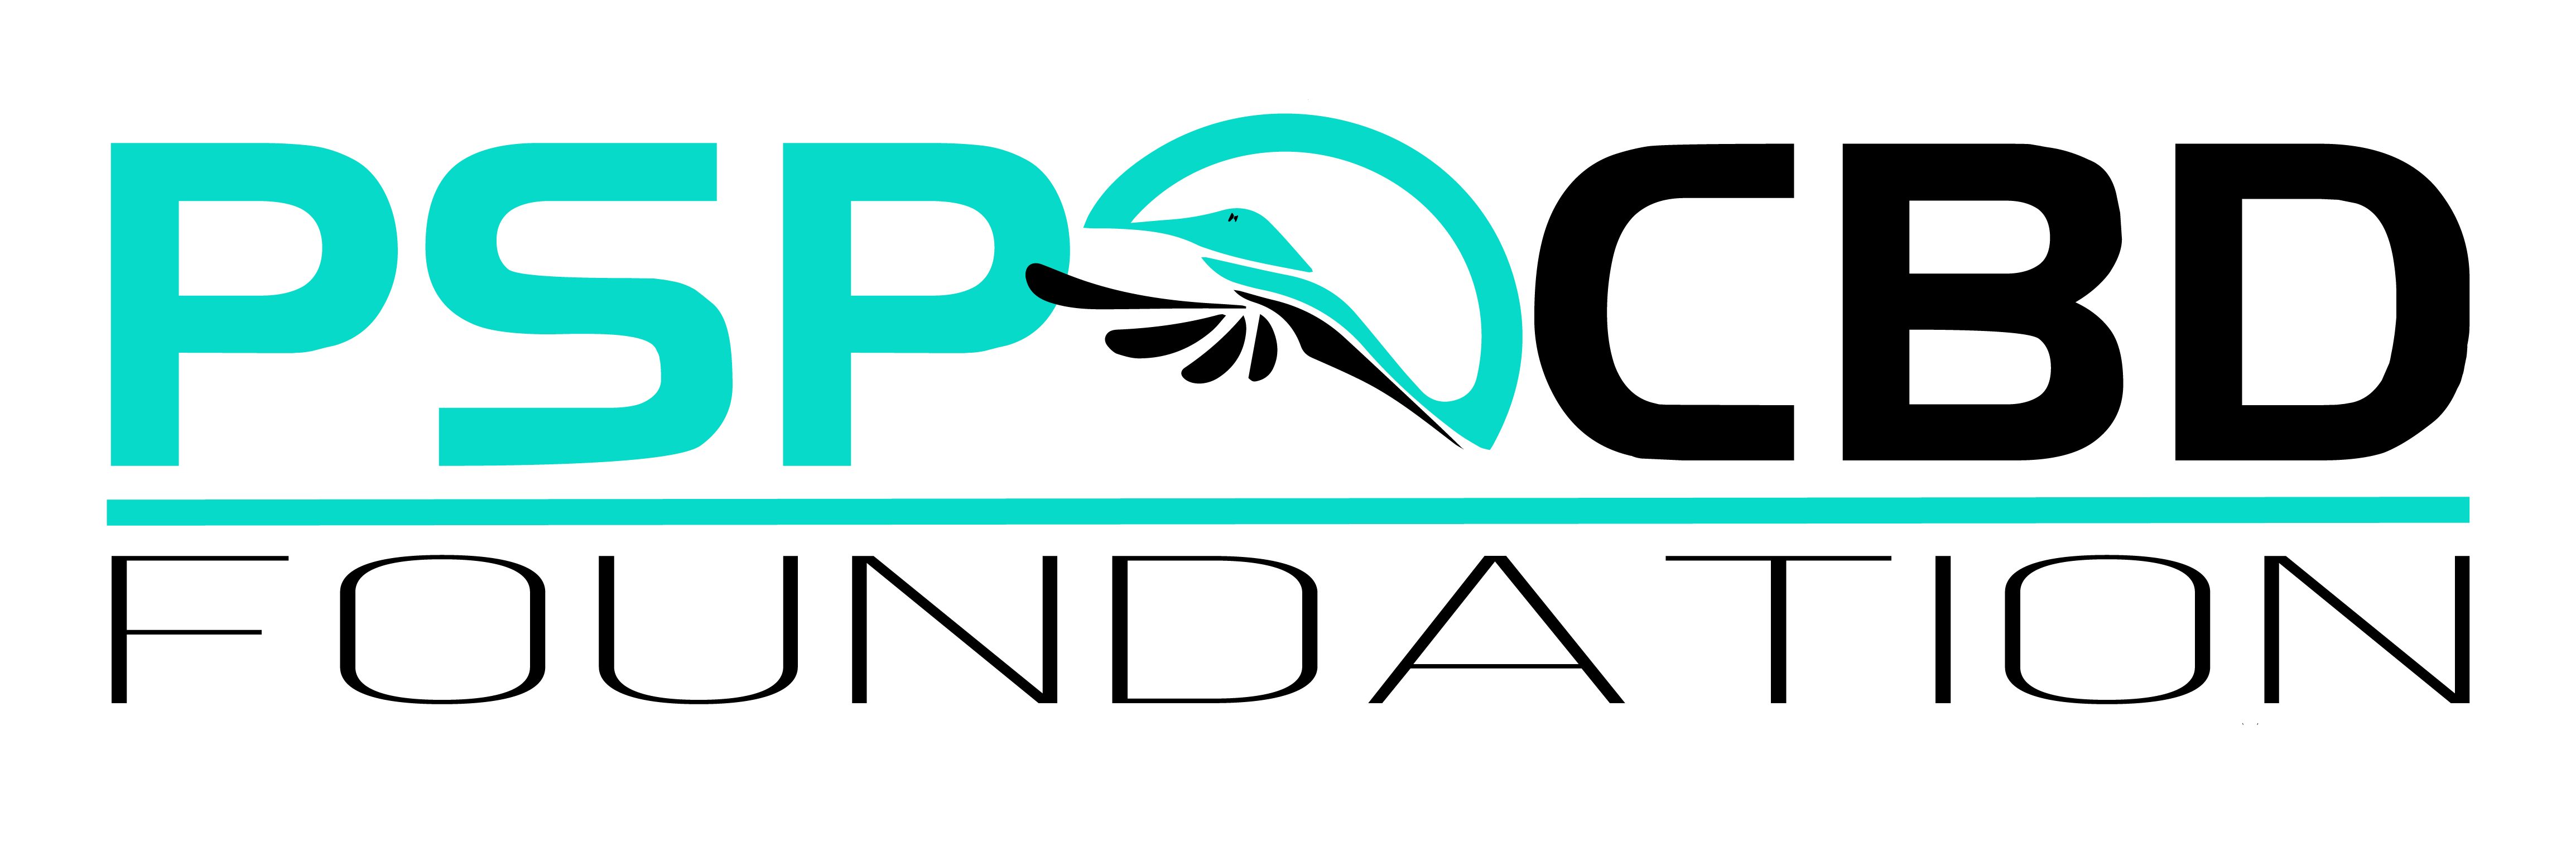 PSP & CBD Foundation logo